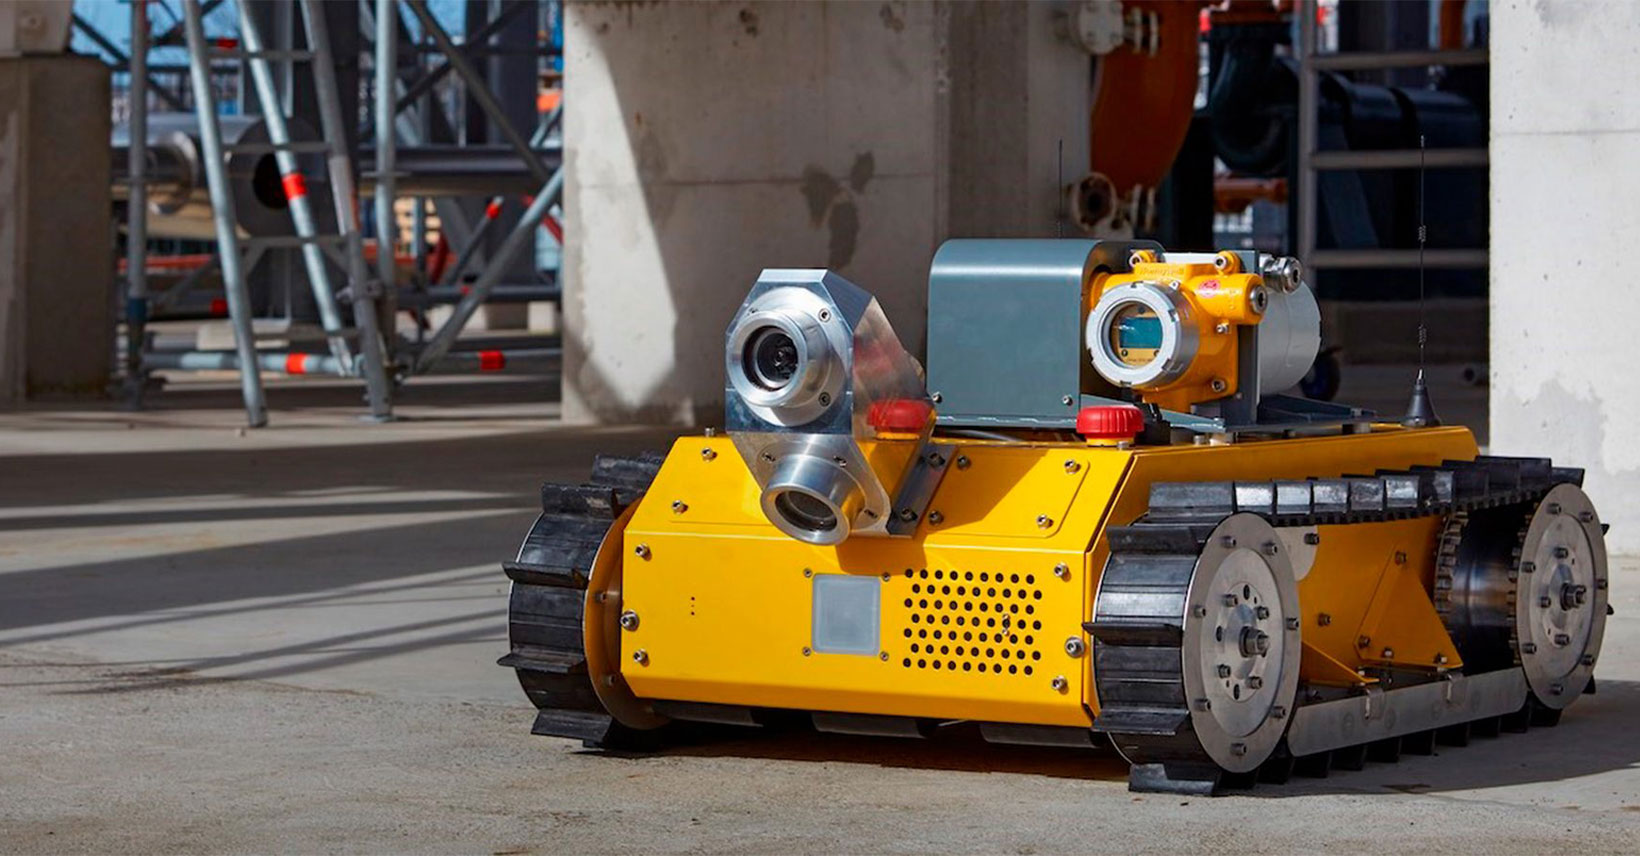 Image of orange robotic